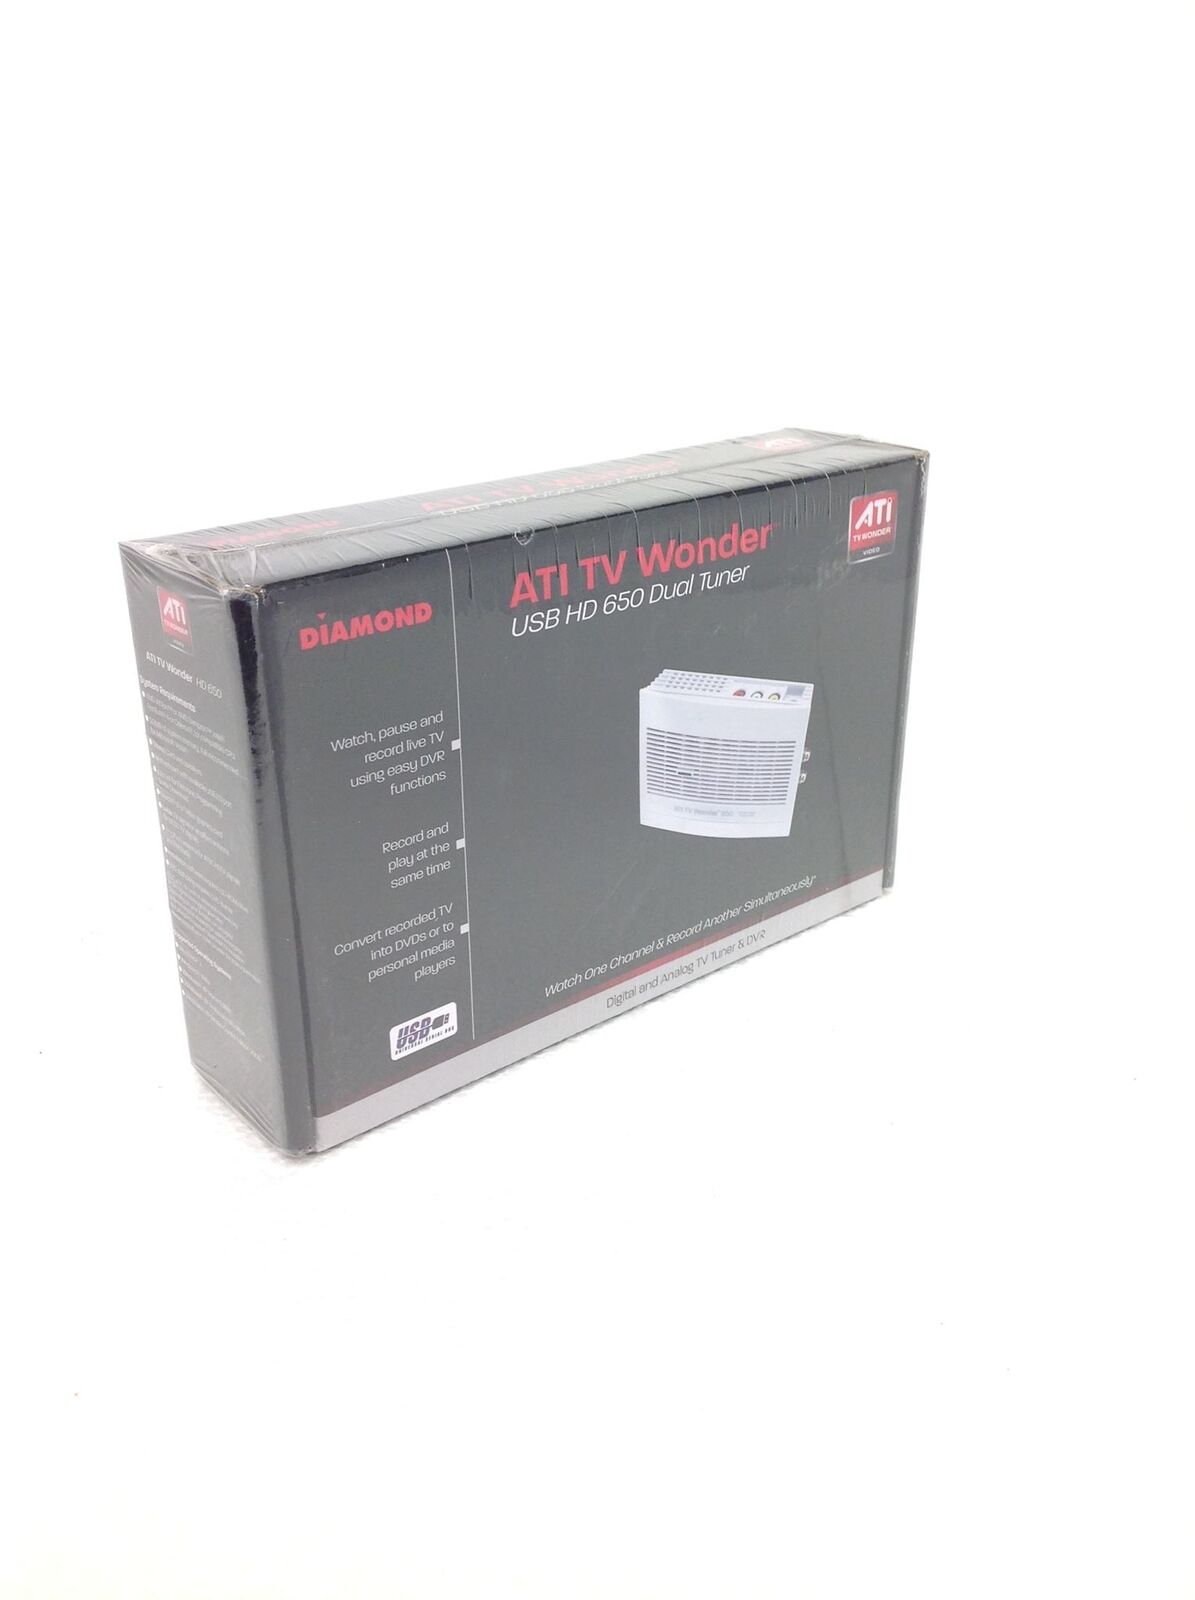 NEW ATI USB HD 650 Digital & Analog TV Tuner w/USB 2.0 Cable/User Manual